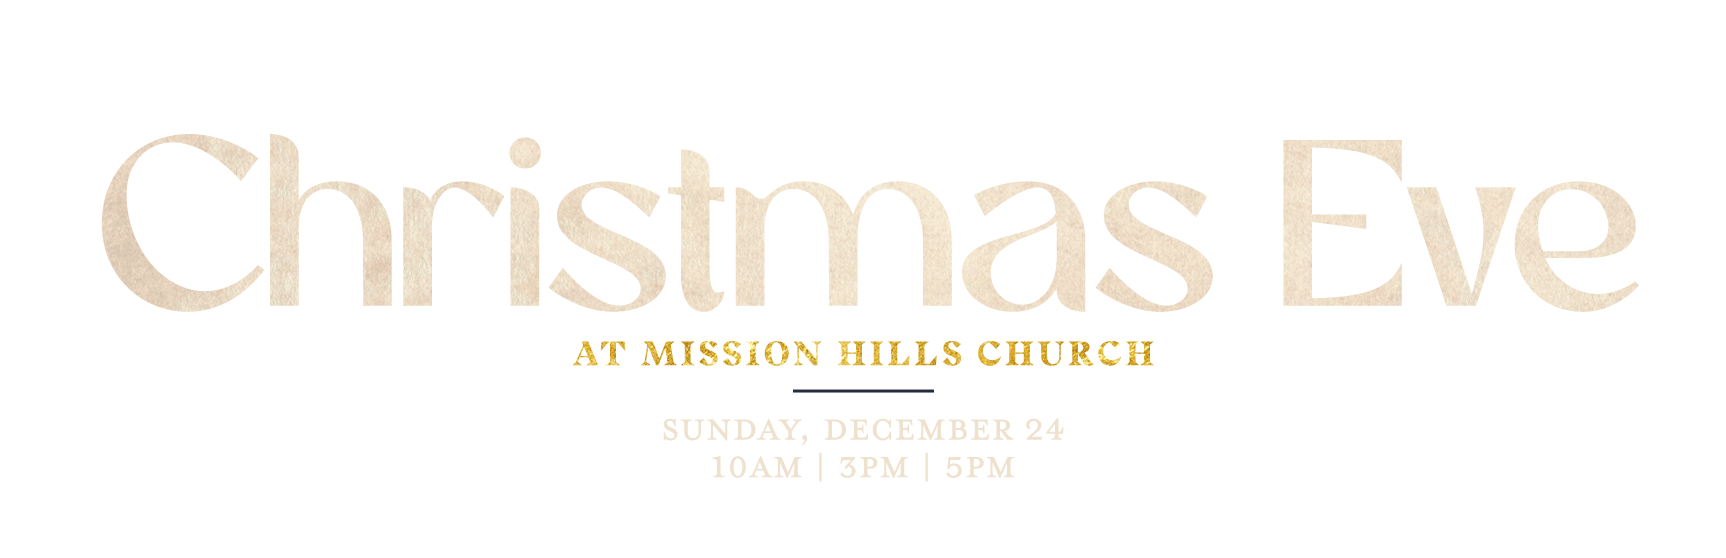 Splash Page | Mission Hills Church